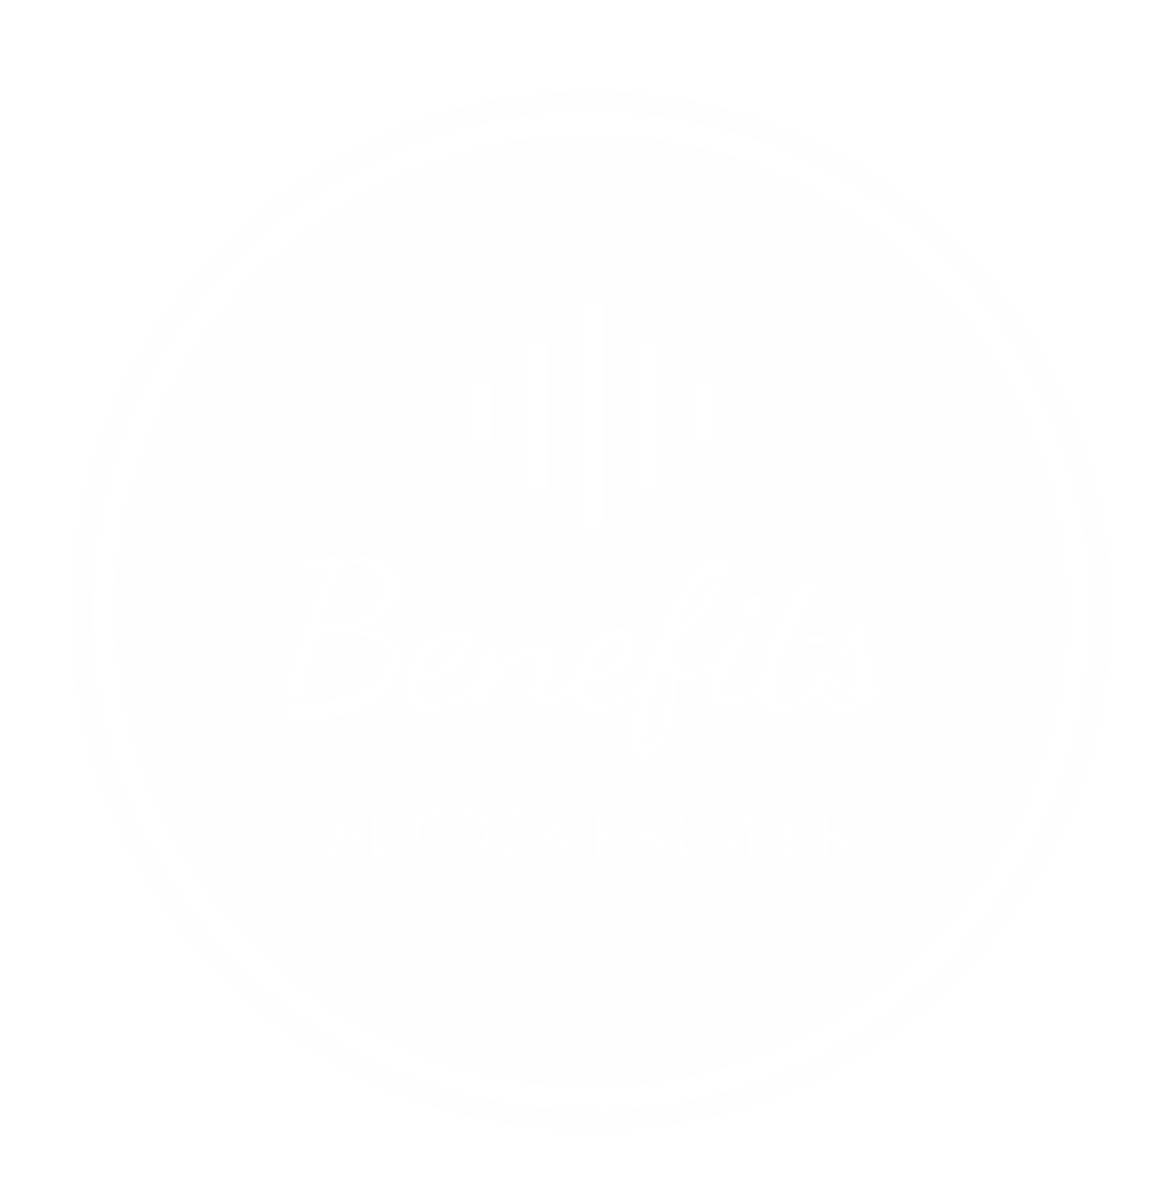 Adcock Premier Benefits